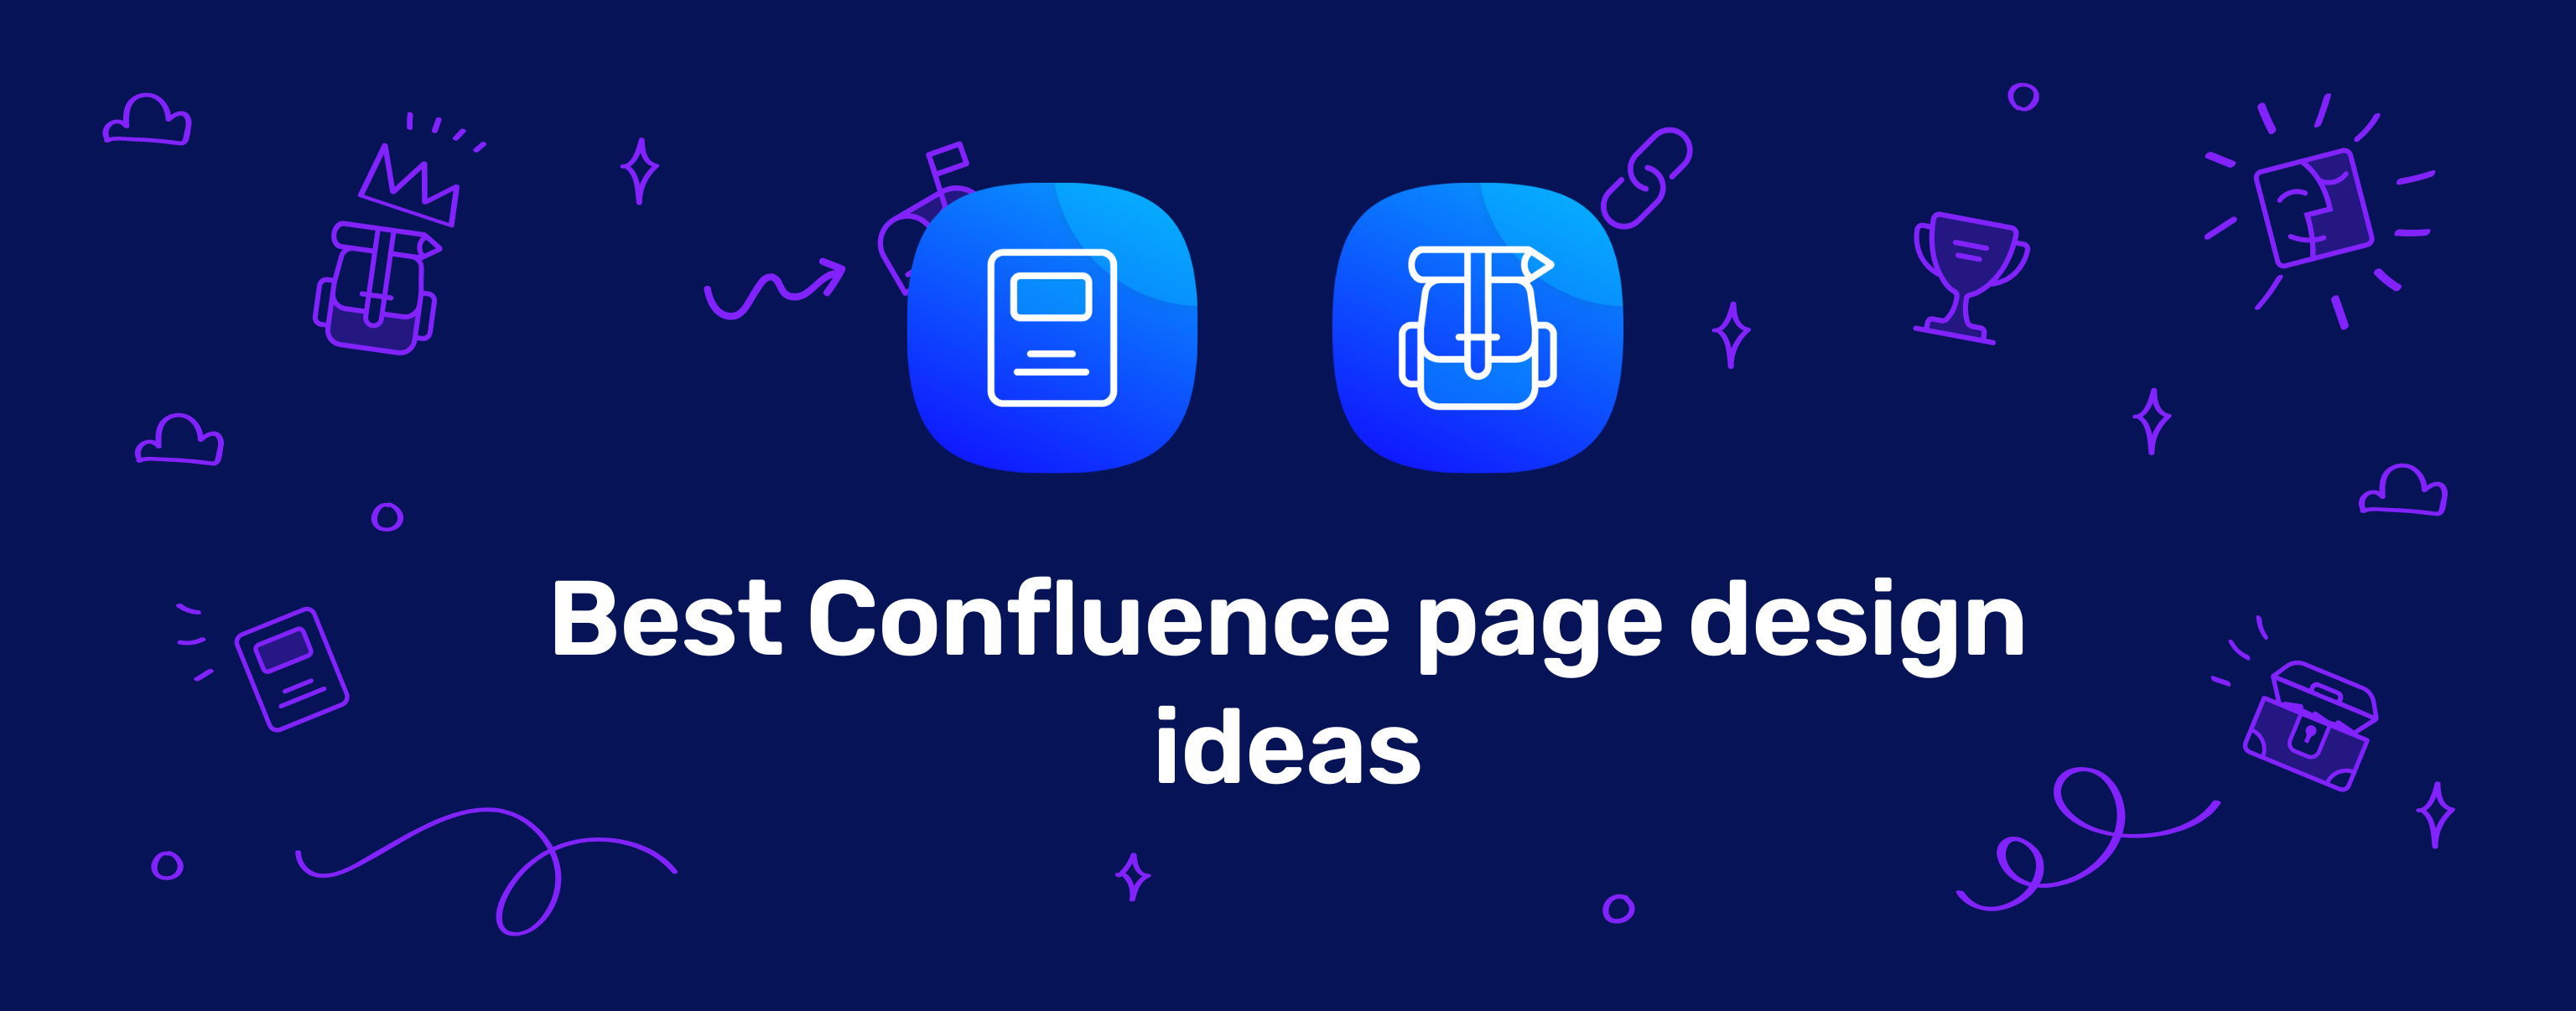 Best Confluence page design ideas blog thumbnail